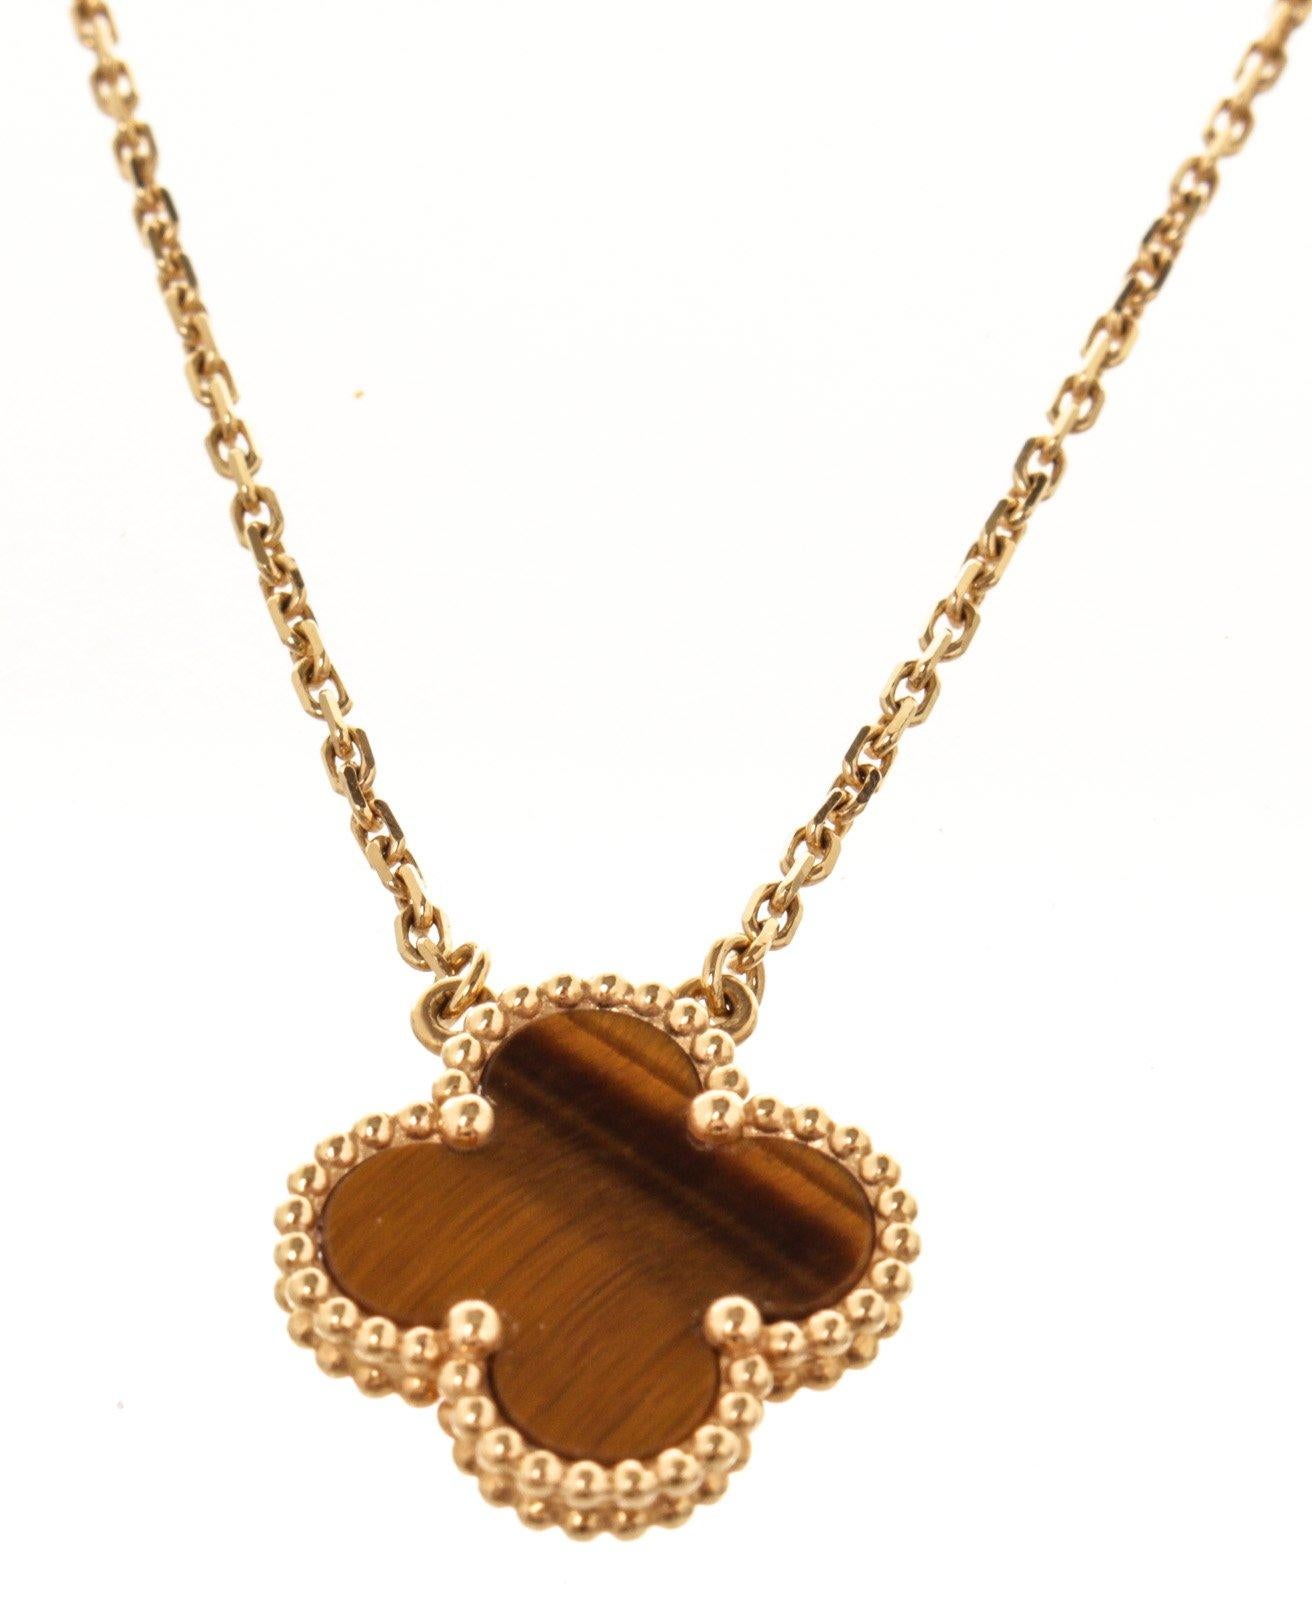 Van Cleef & Arpels Gold Vintage Alhambra Necklace with gold-tone hardware.

43482MSC